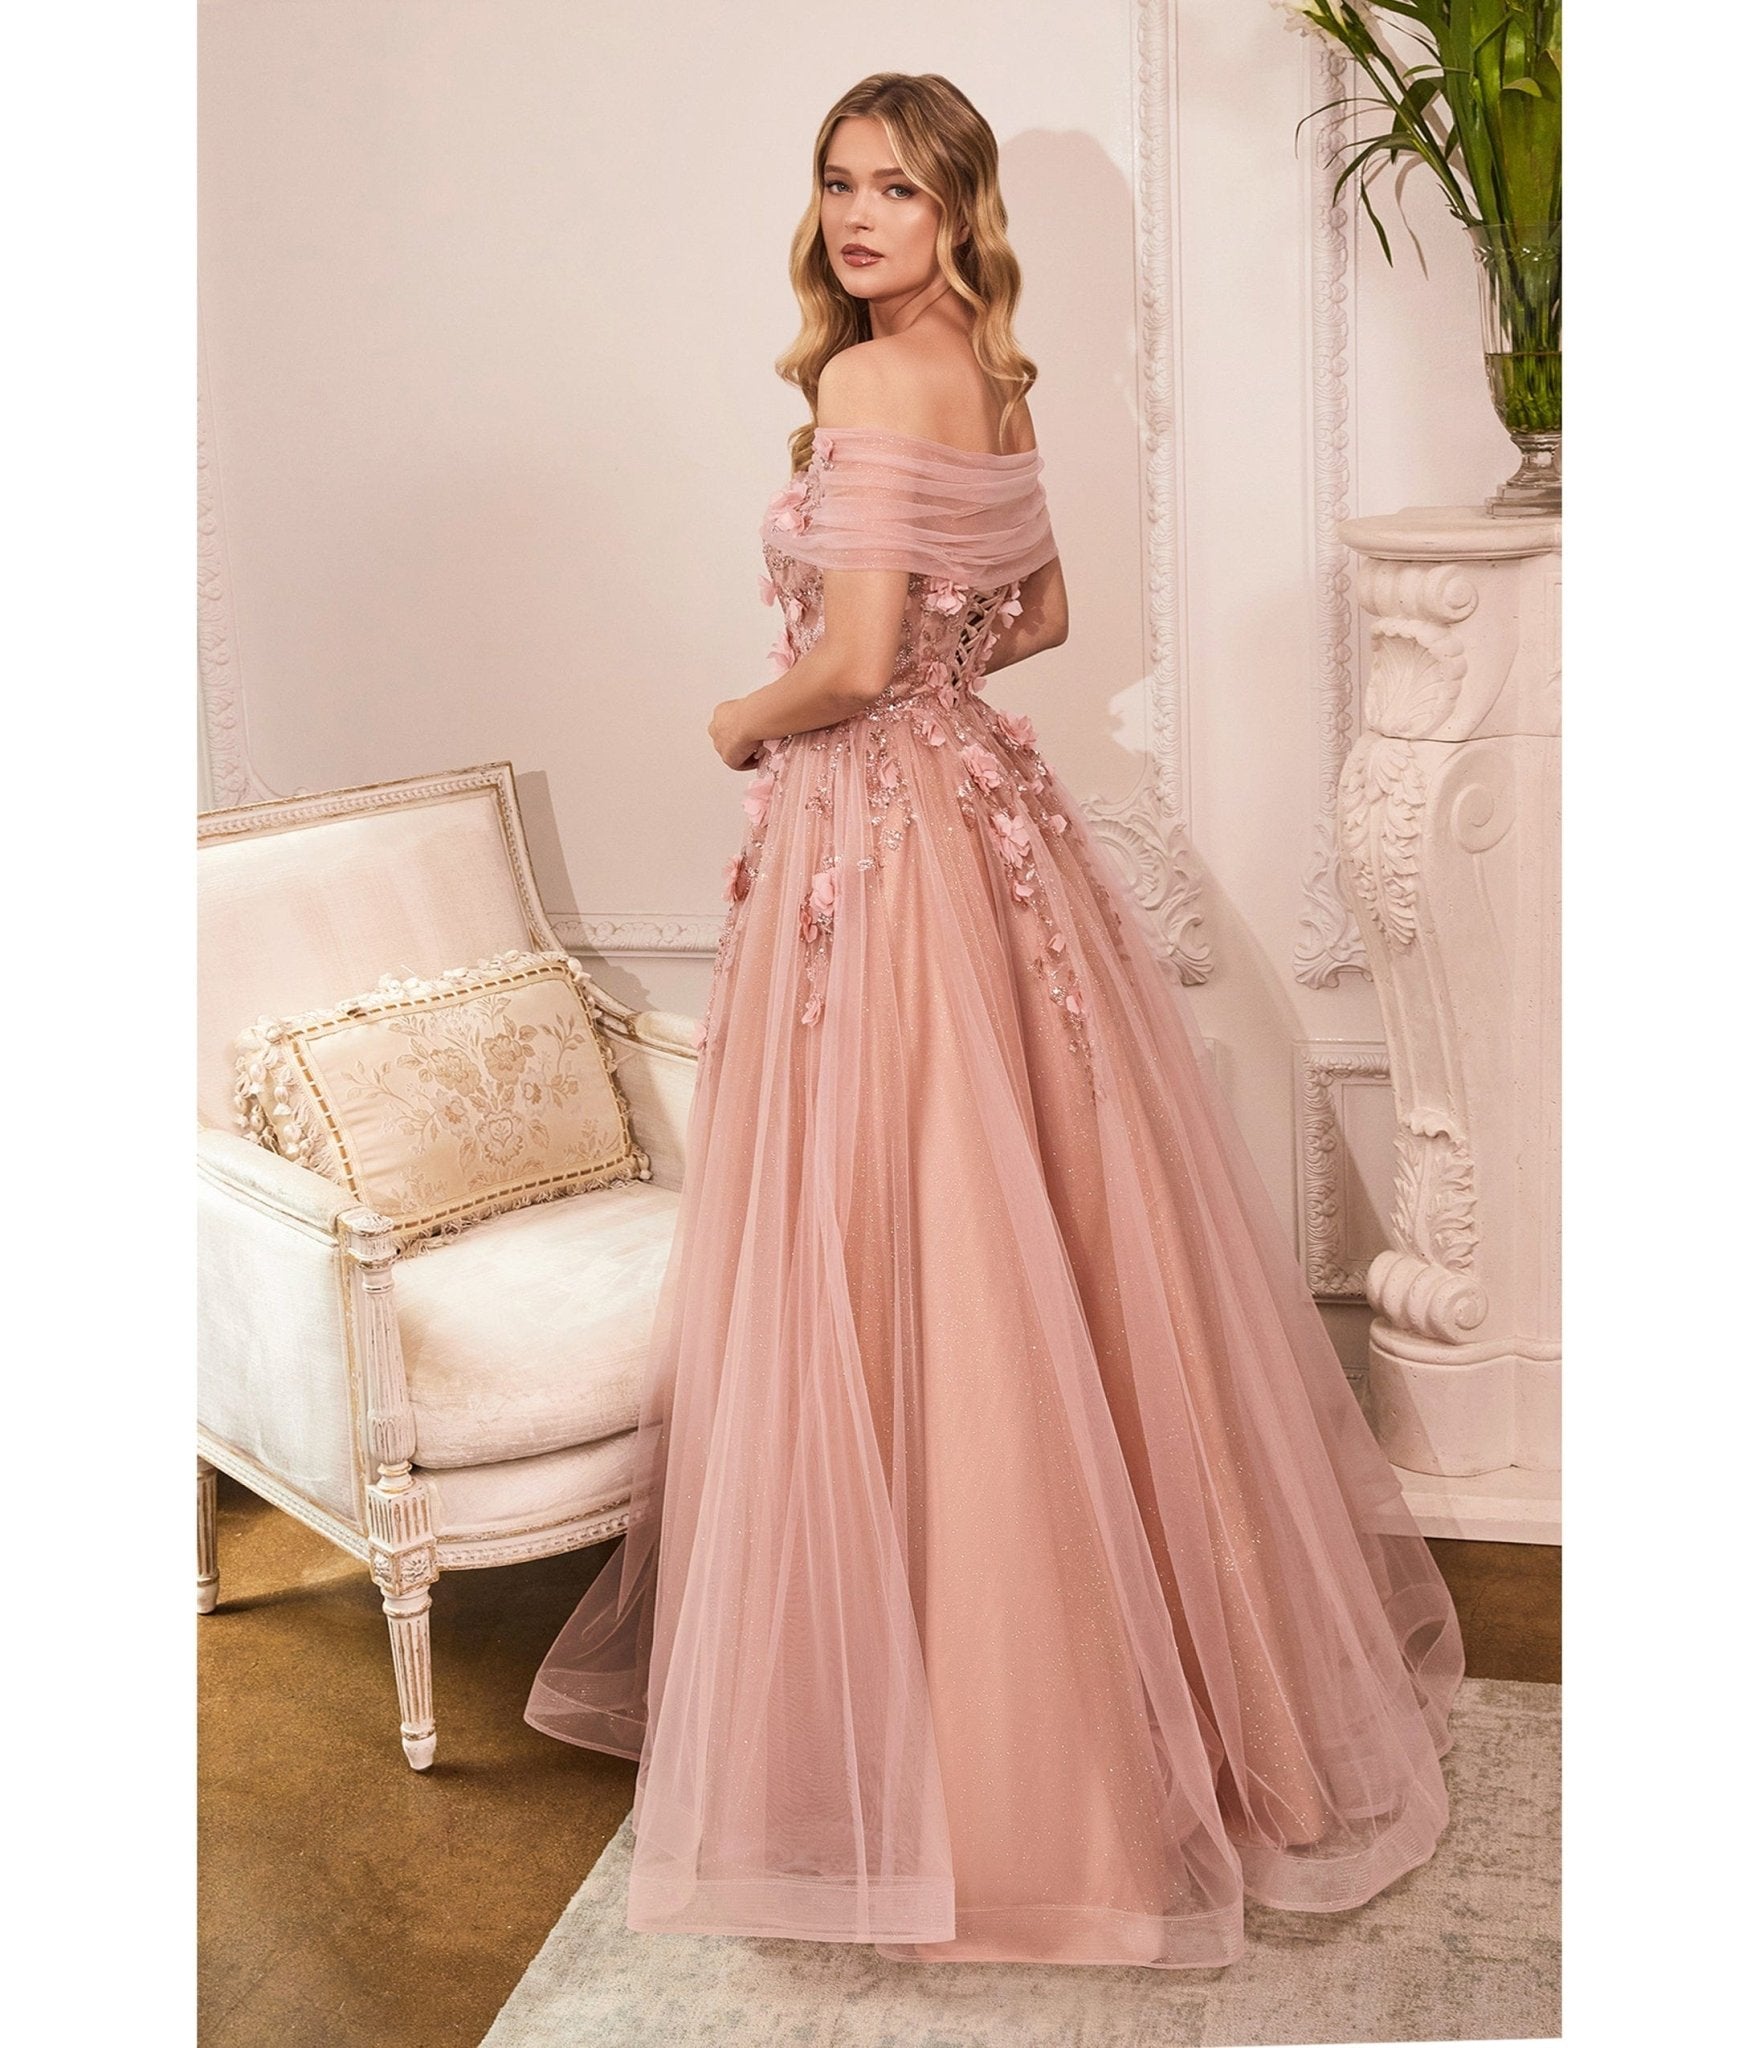 Rose Gold Blush Bridal Sash Belt Wedding Dress Accessory 